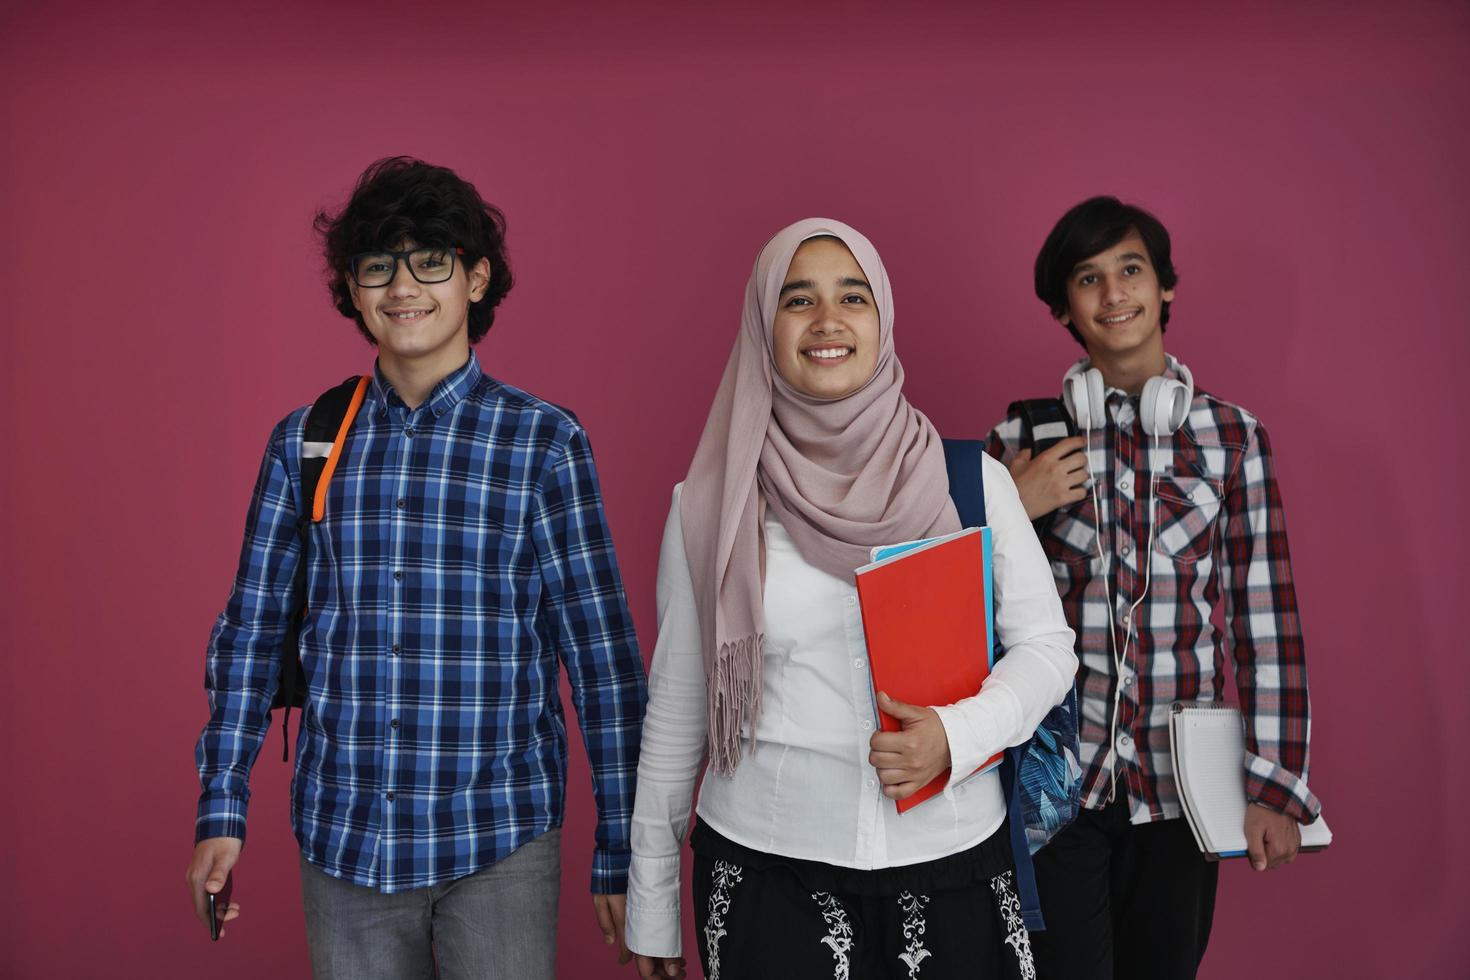 Arab teens group photo